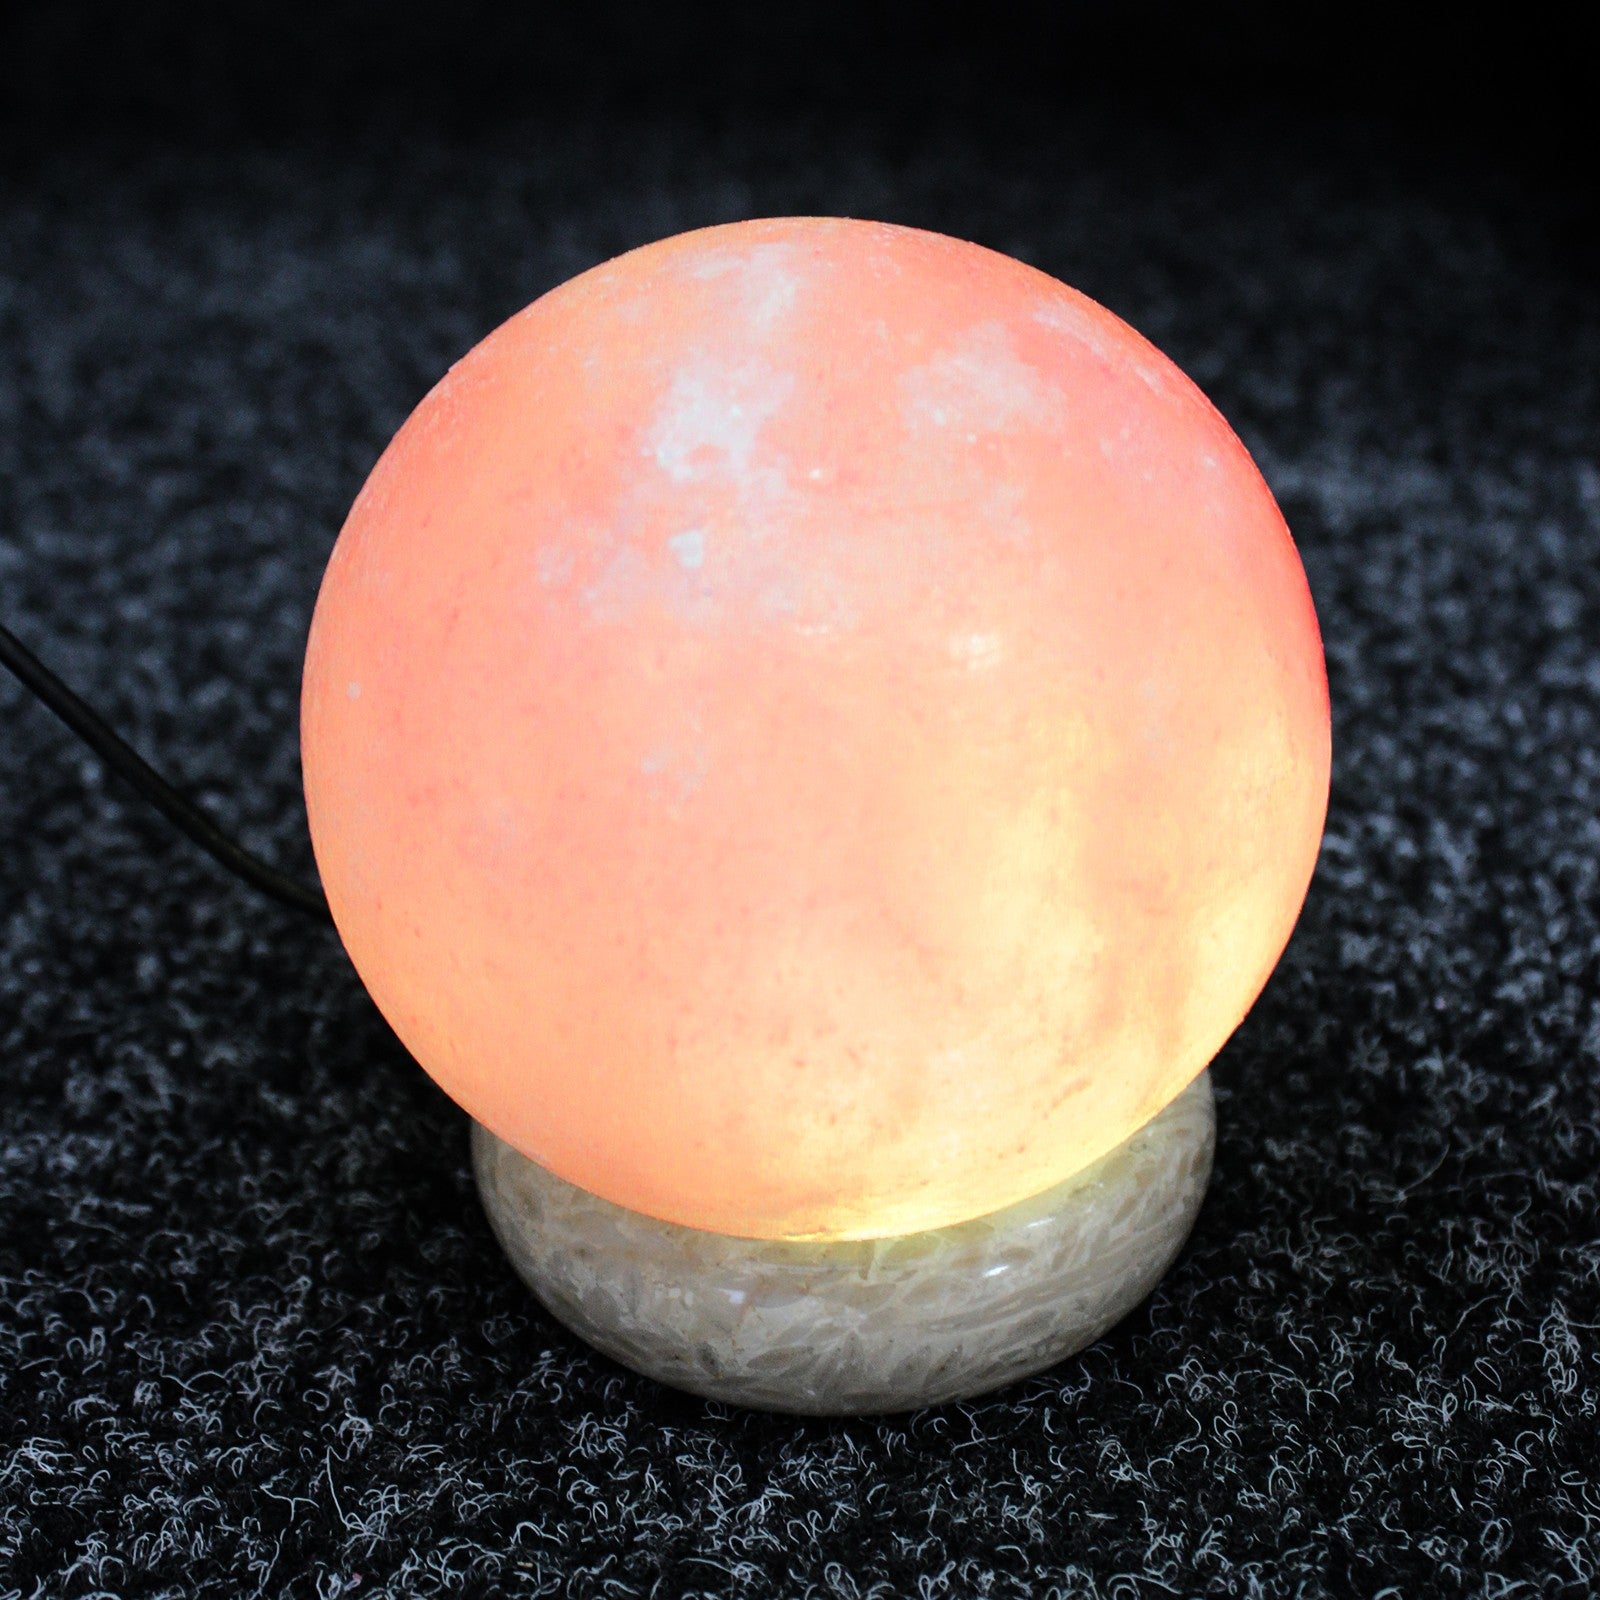 Salt lamp ball